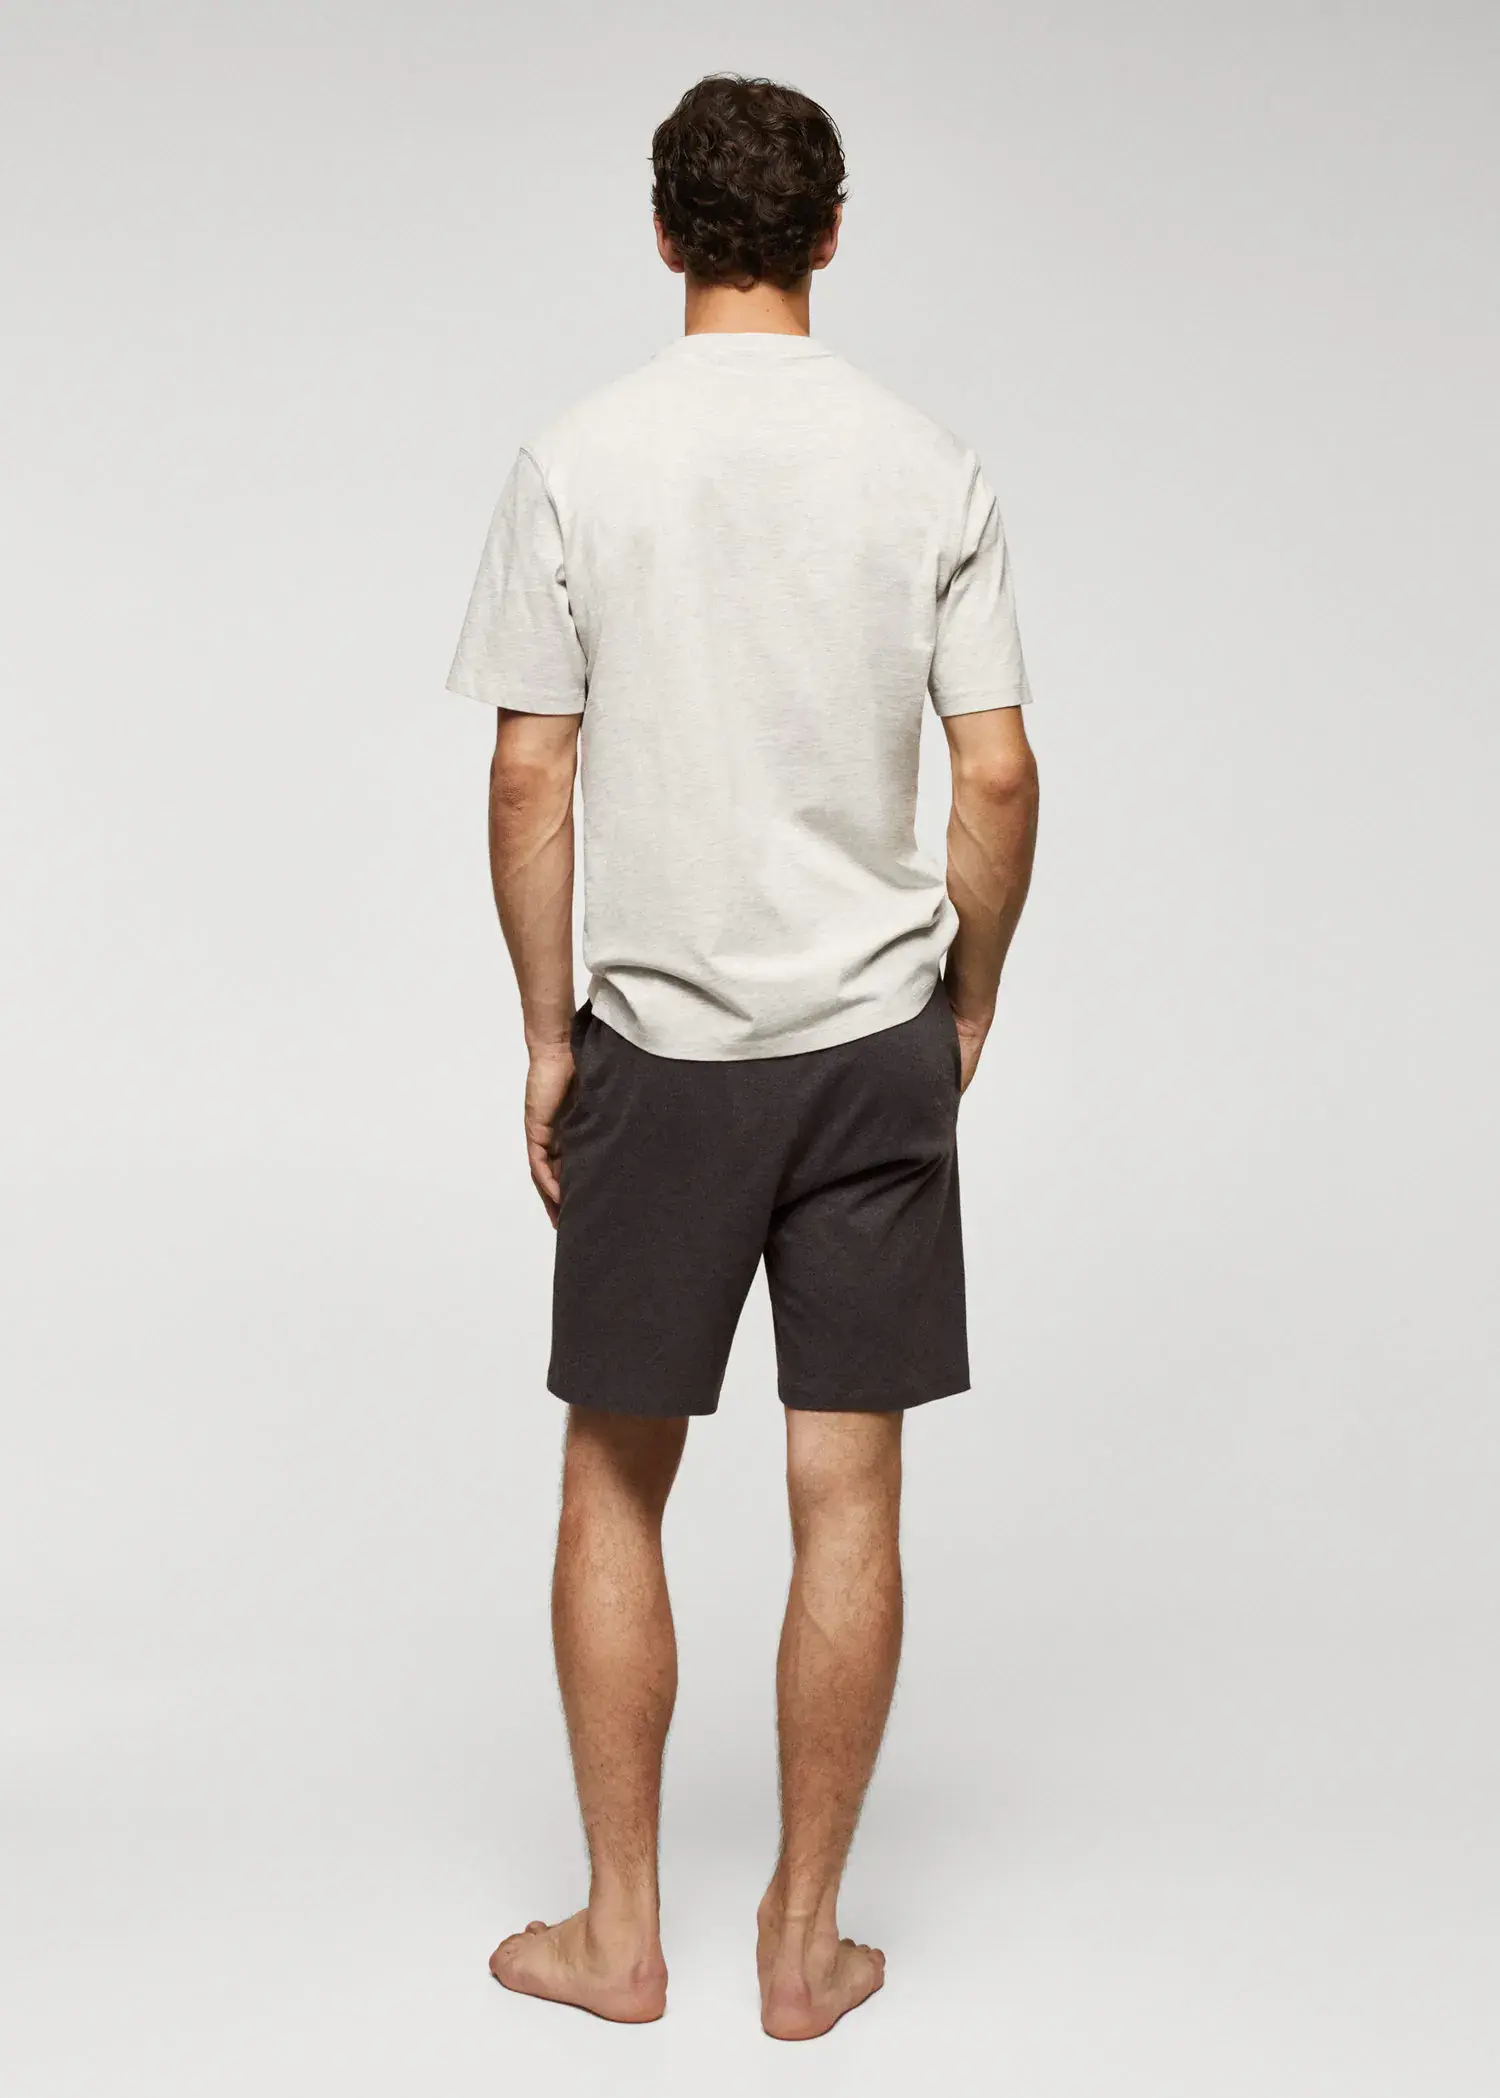 Mango Cotton pyjama shorts pack. a man wearing a white shirt and black shorts. 